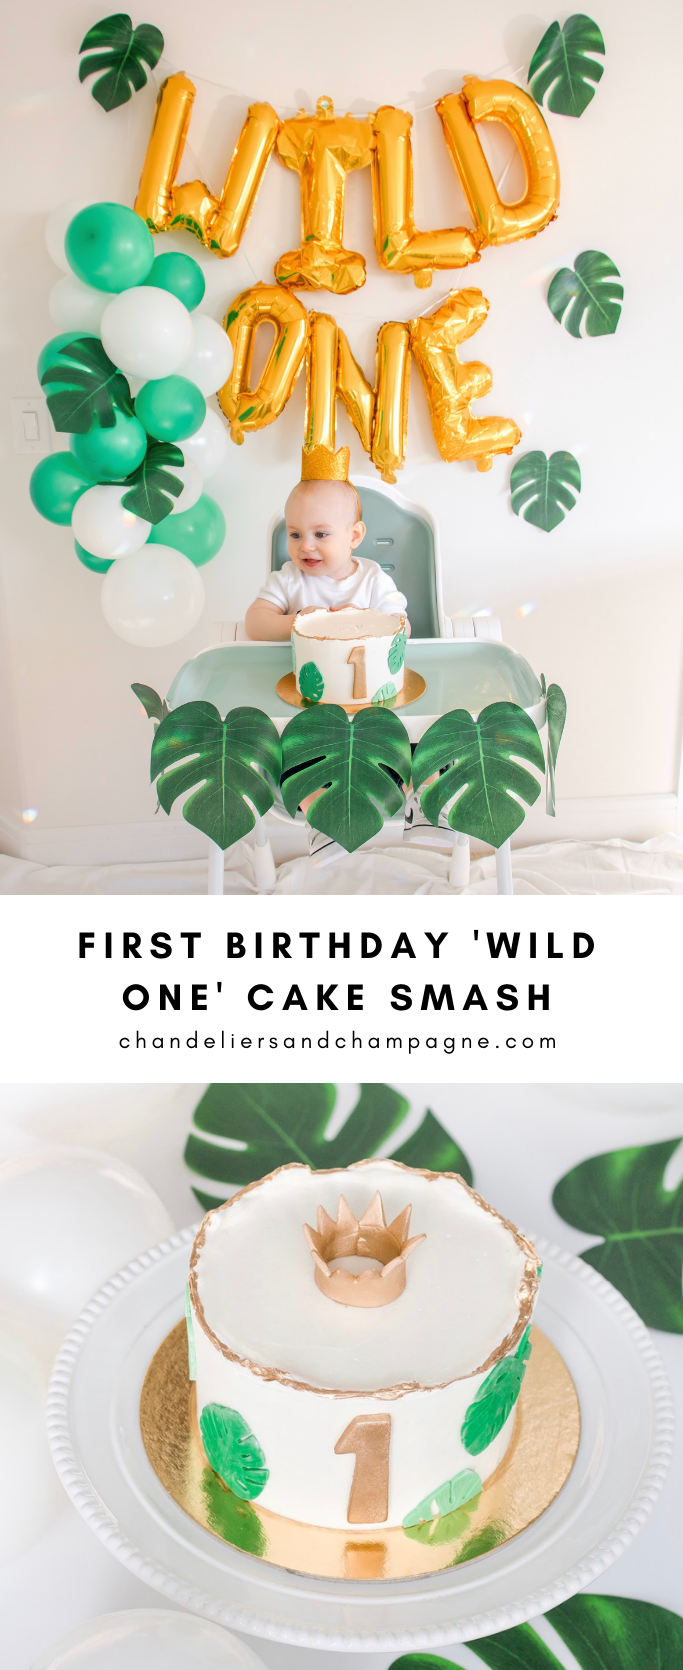 First birthday Wild ONE cake smash